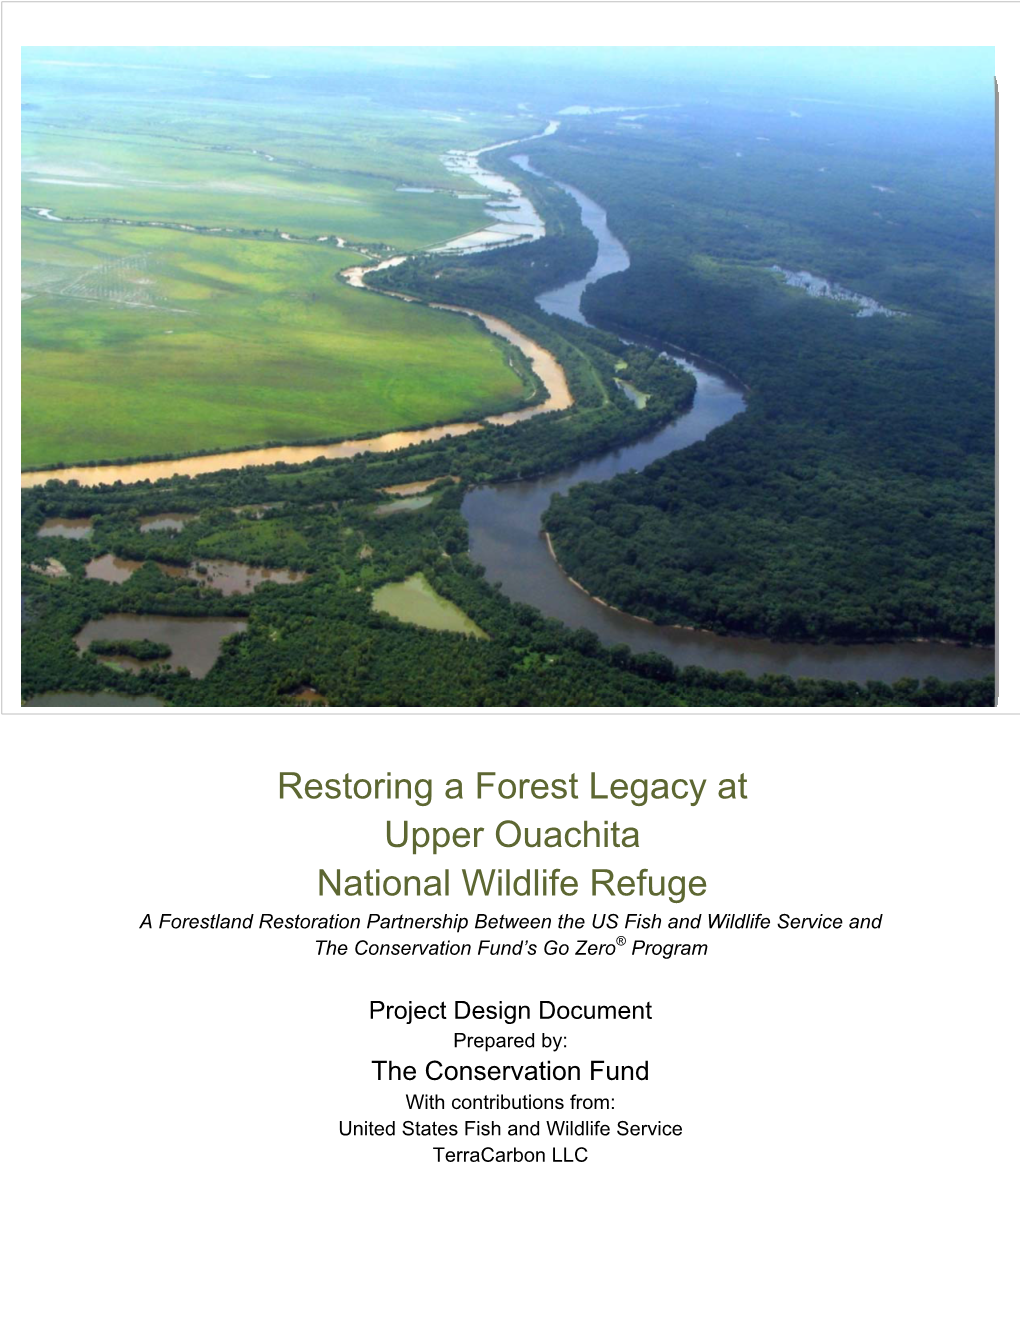 Restoring a Forest Legacy at Upper Ouachita National Wildlife Refuge